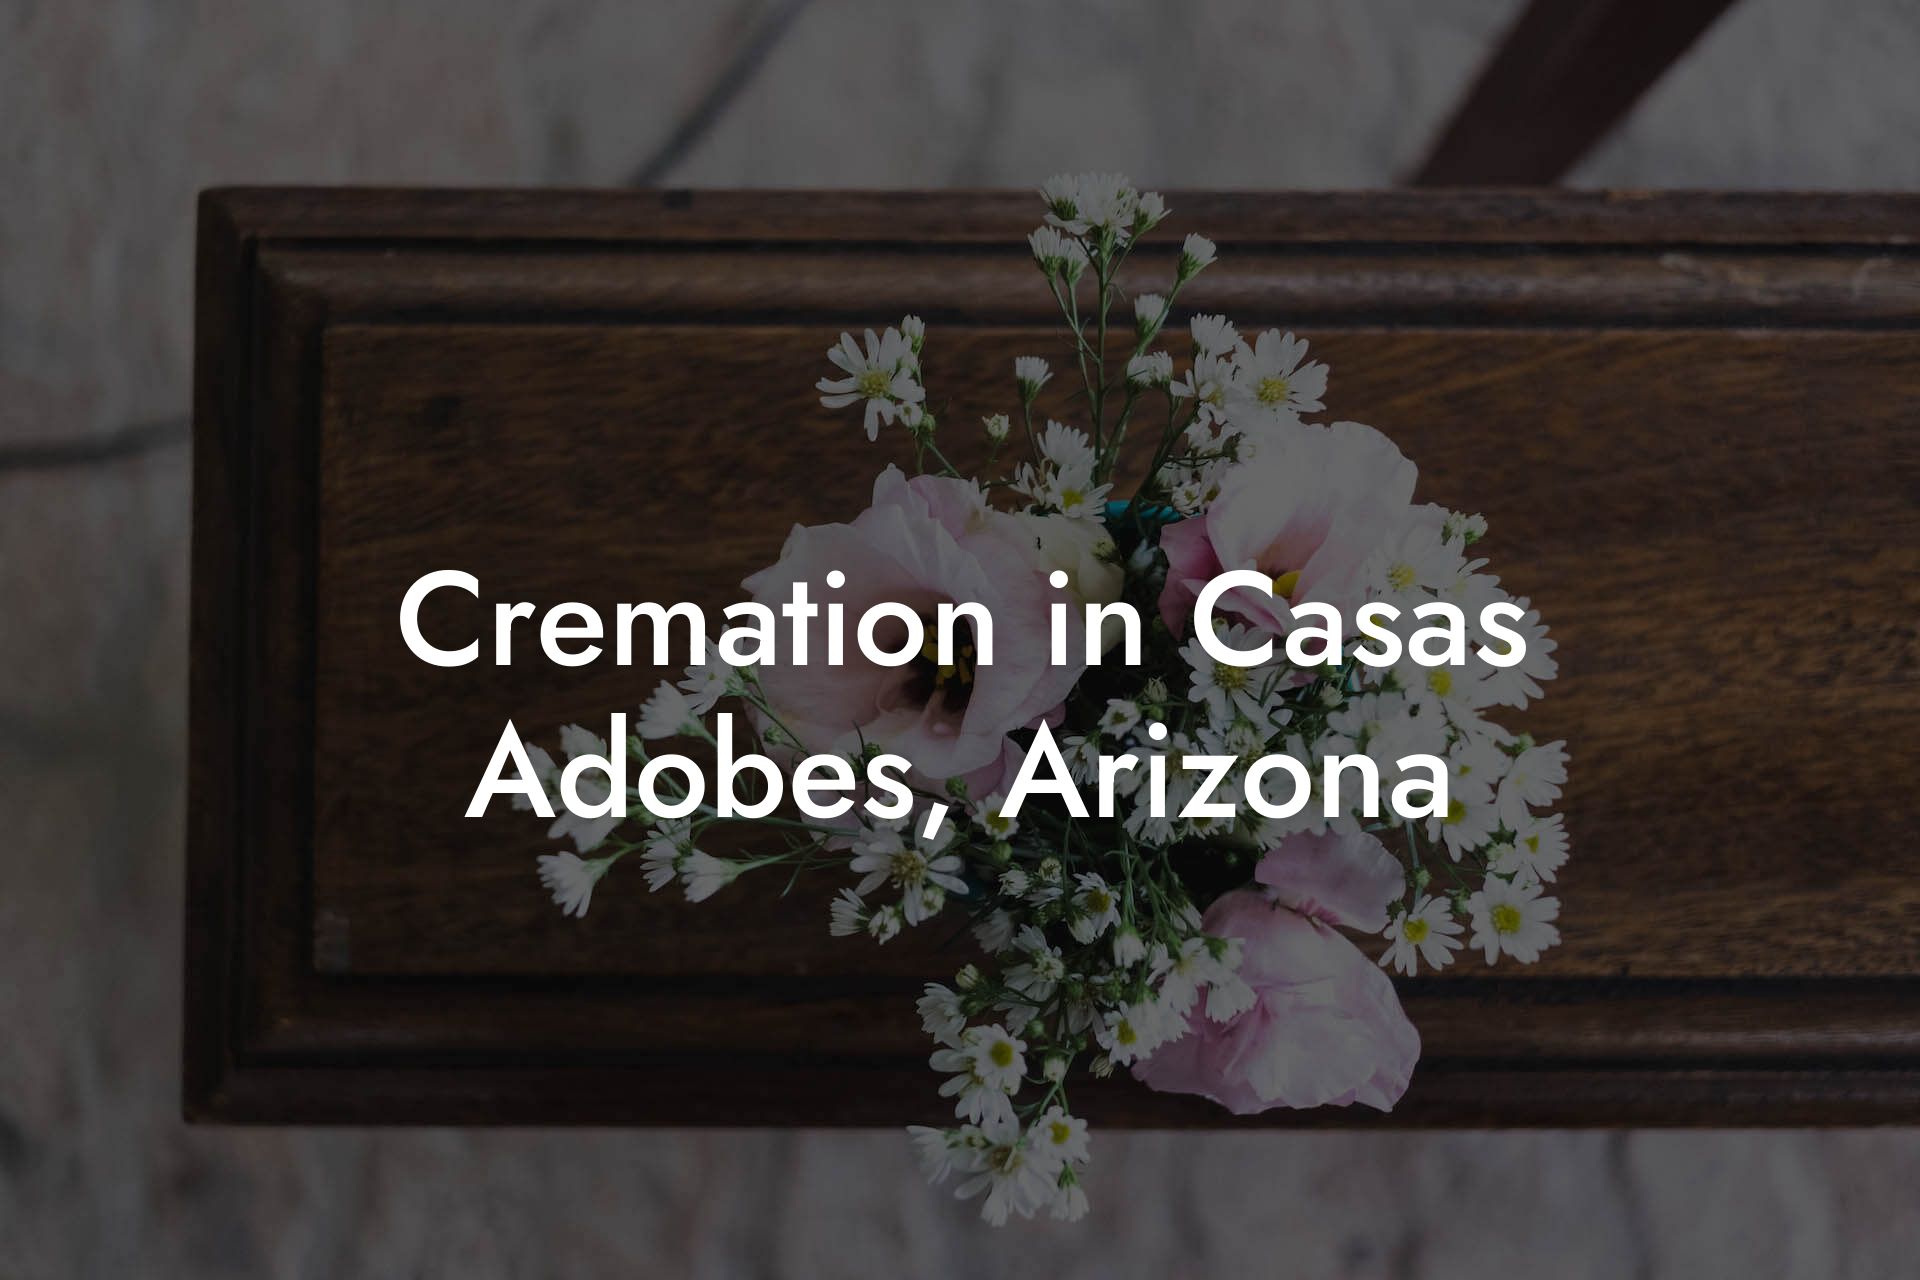 Cremation in Casas Adobes, Arizona